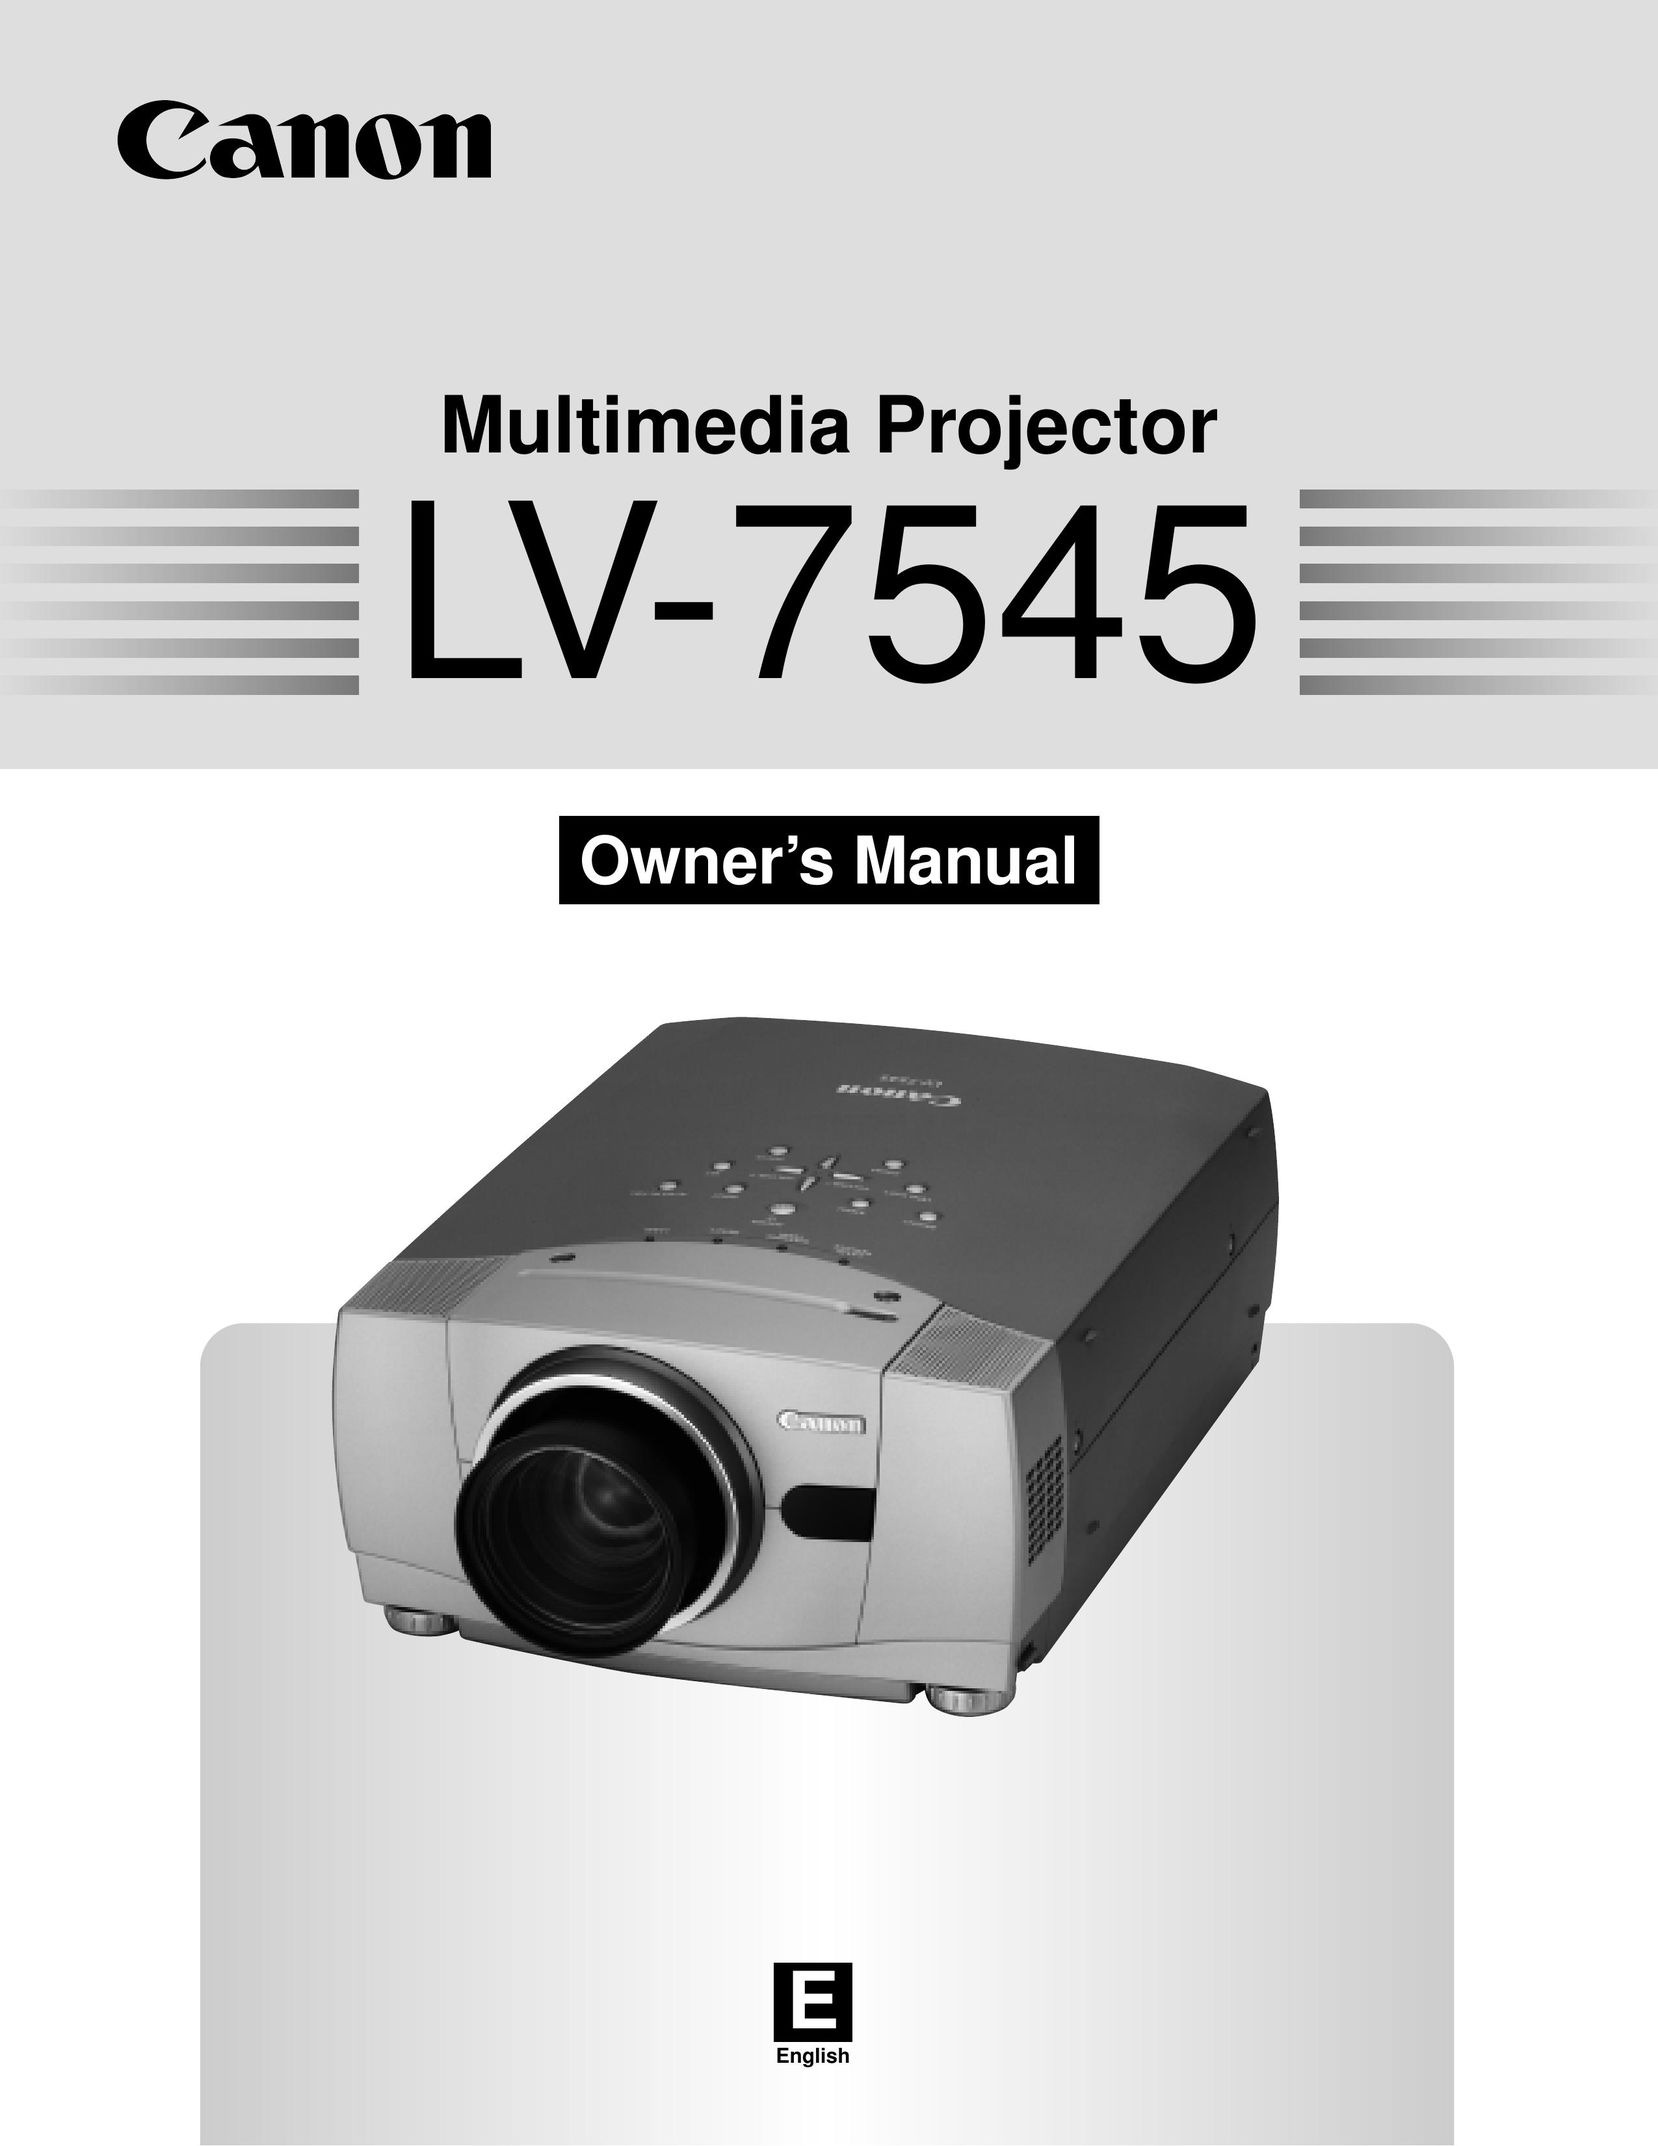 Canon 7545 Projector User Manual